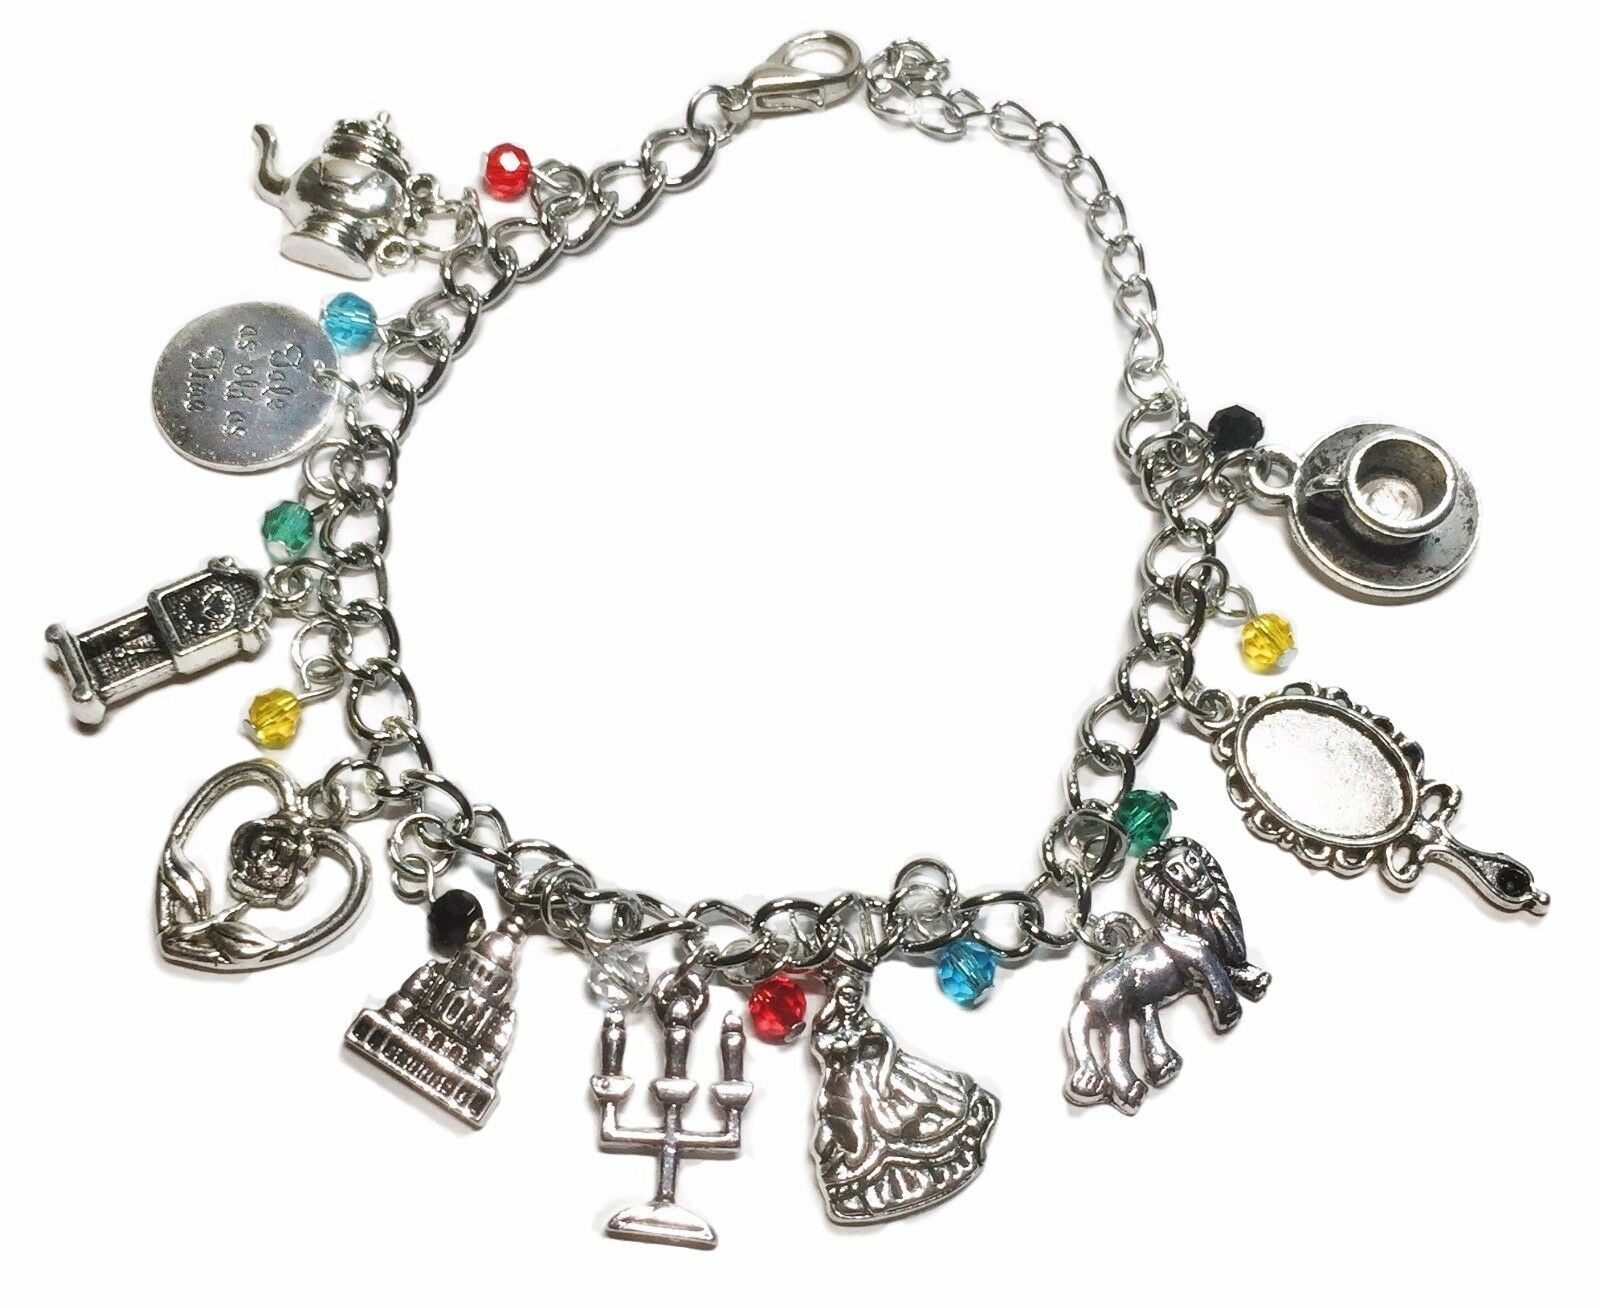  Bioworld Harry Potter Slytherin Charm Bracelet Friendship  Bracelet Gift Set - 4 Pack multi-color : Toys & Games